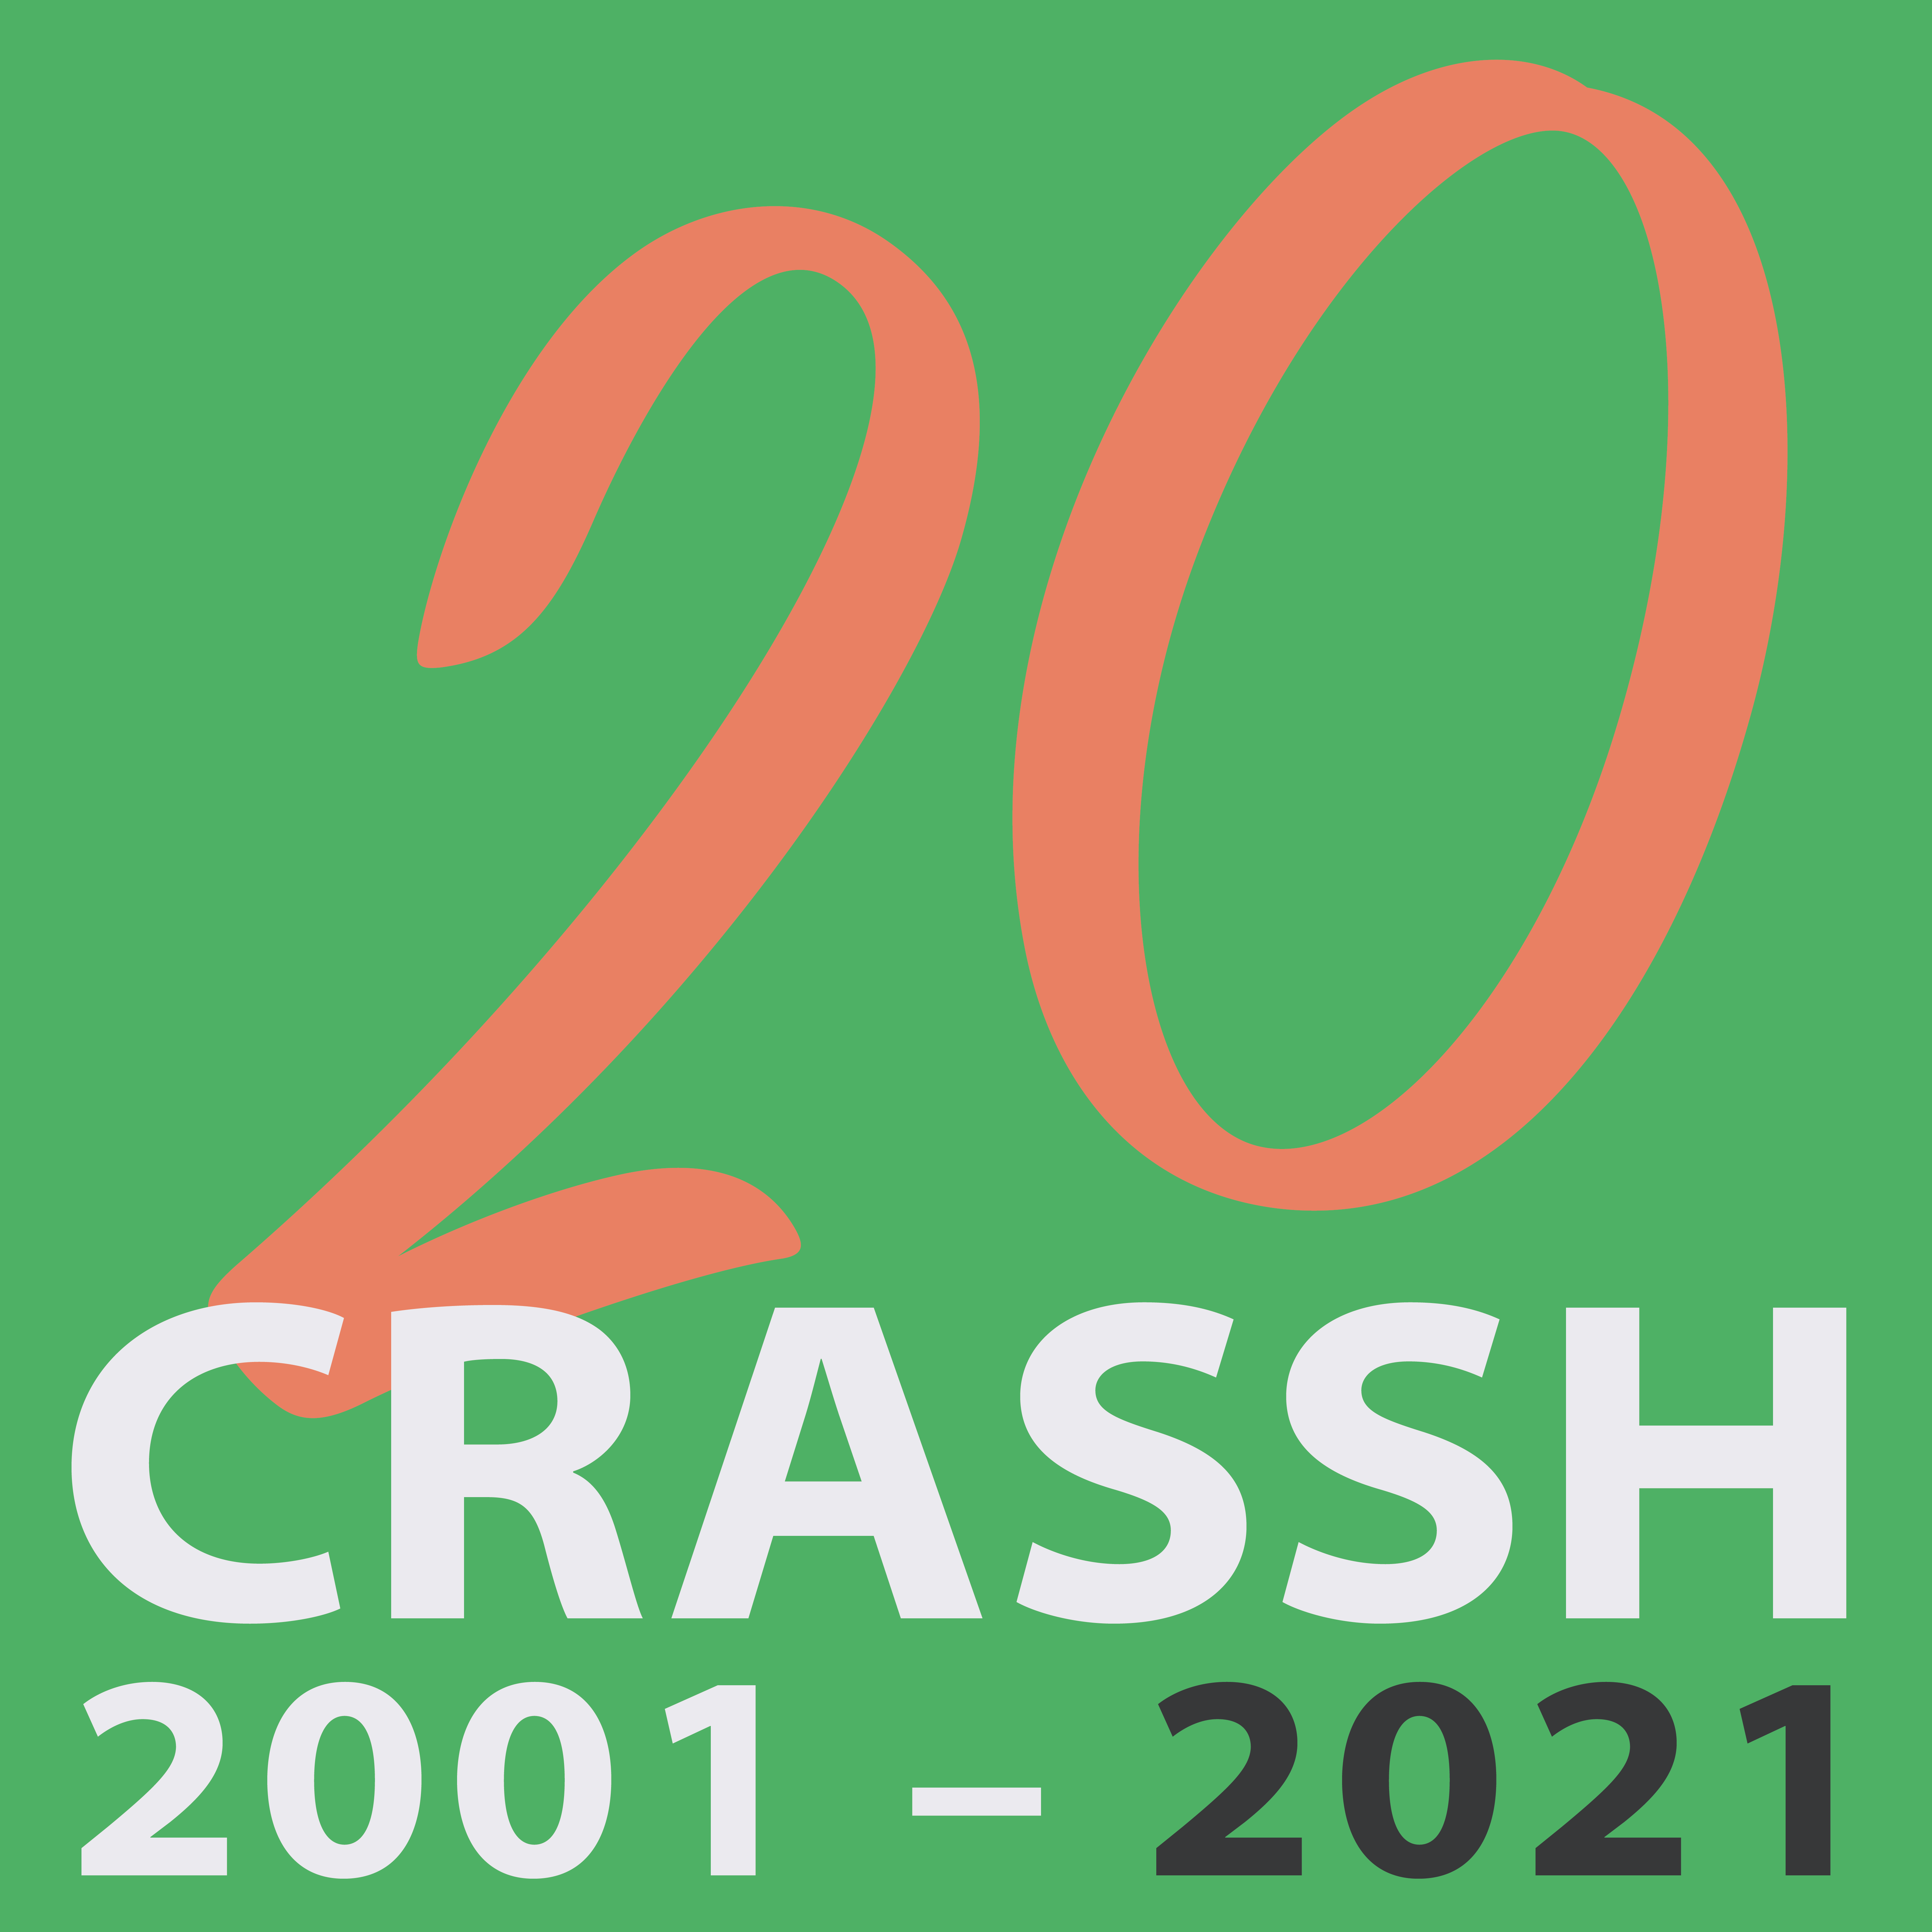 CRASSH 20 Anniversary Logo Green with red and white writing